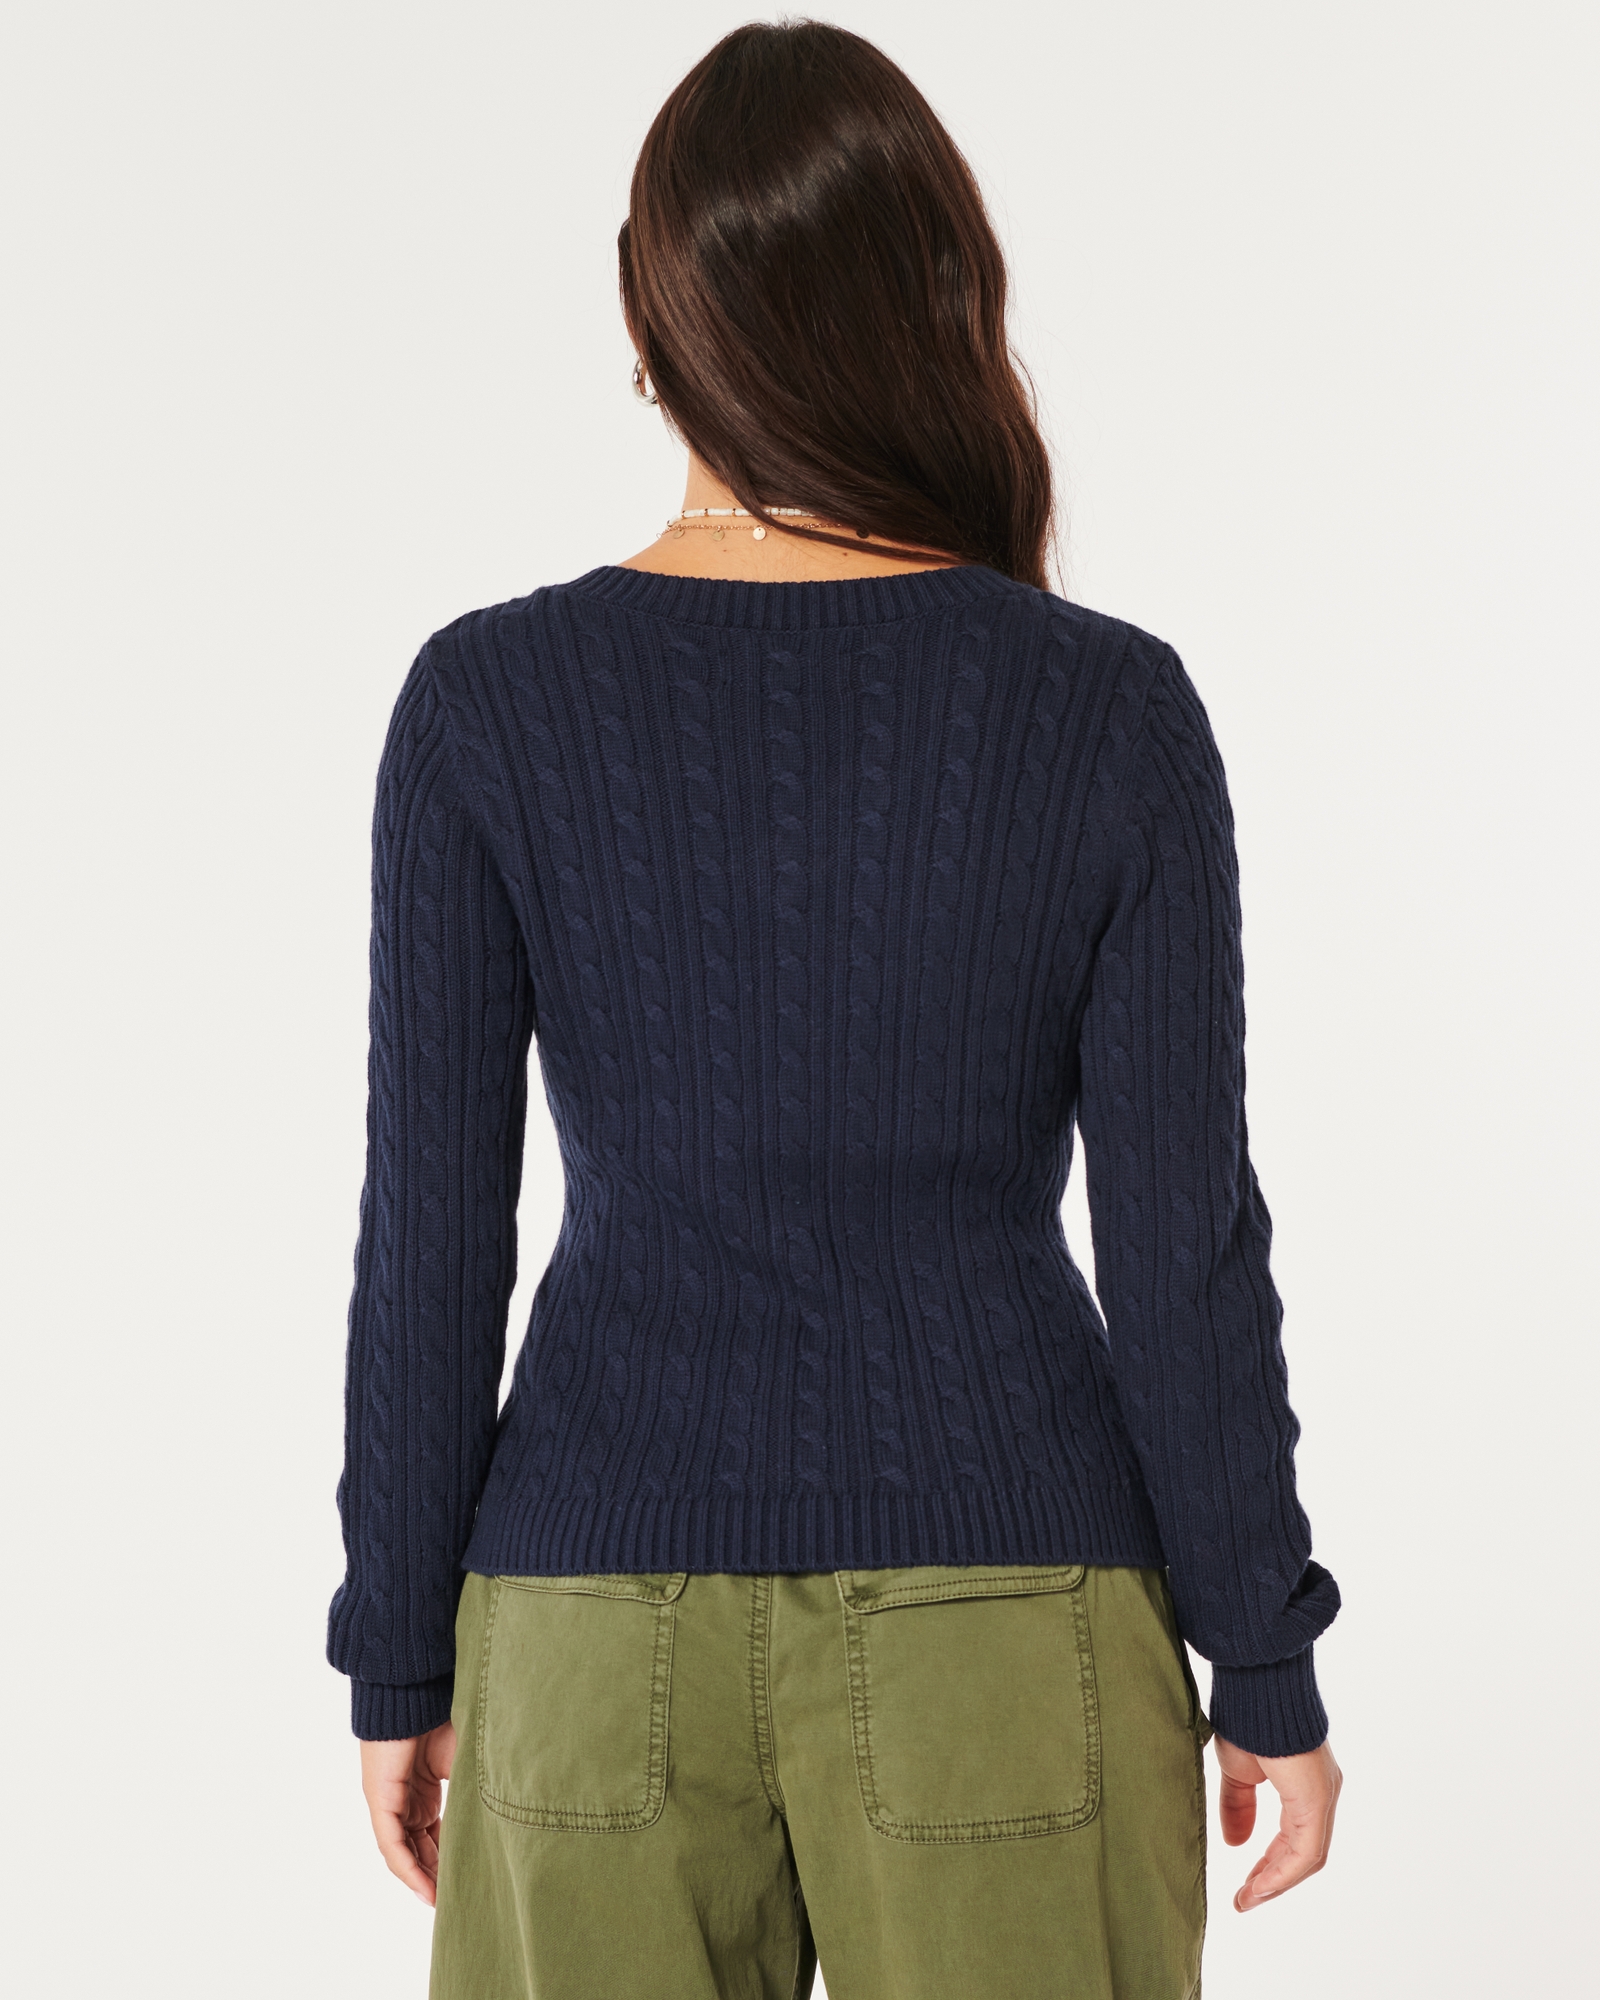 Hollister Blue & Turquoise Variegated V-Neck Sweater Size Jrs S 5